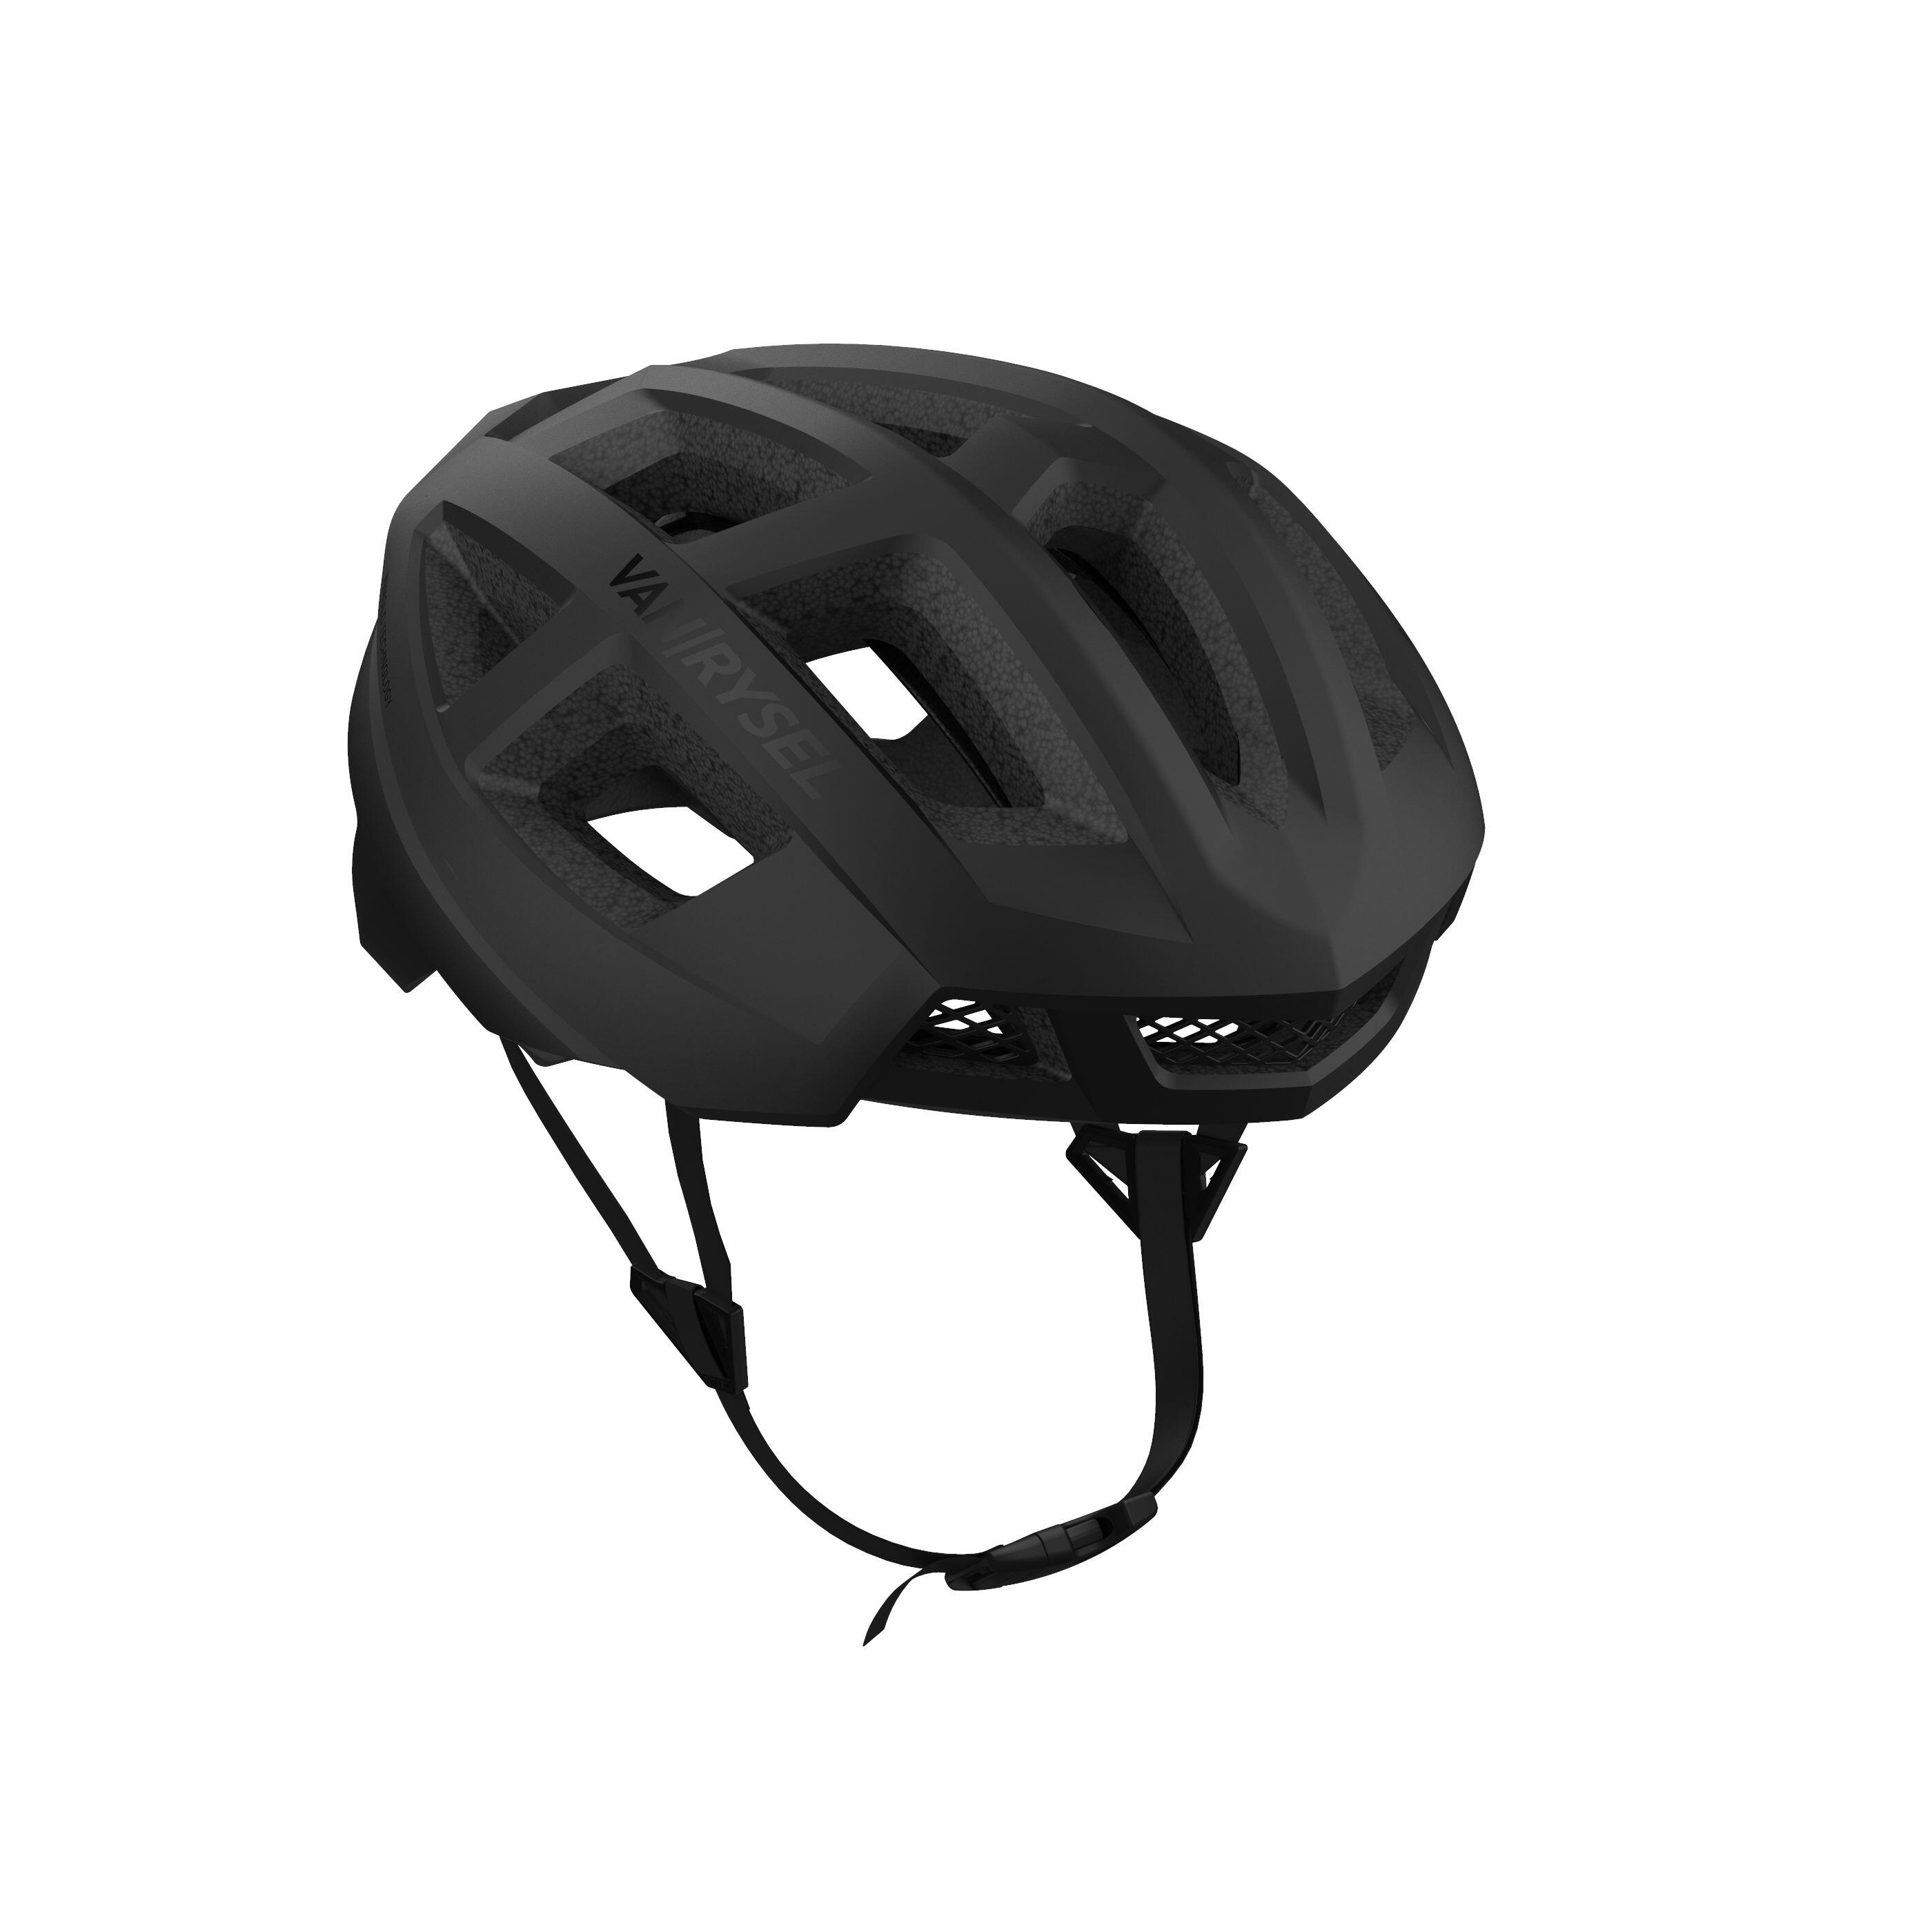 Racer Cycling Helmet - Black - Decathlon